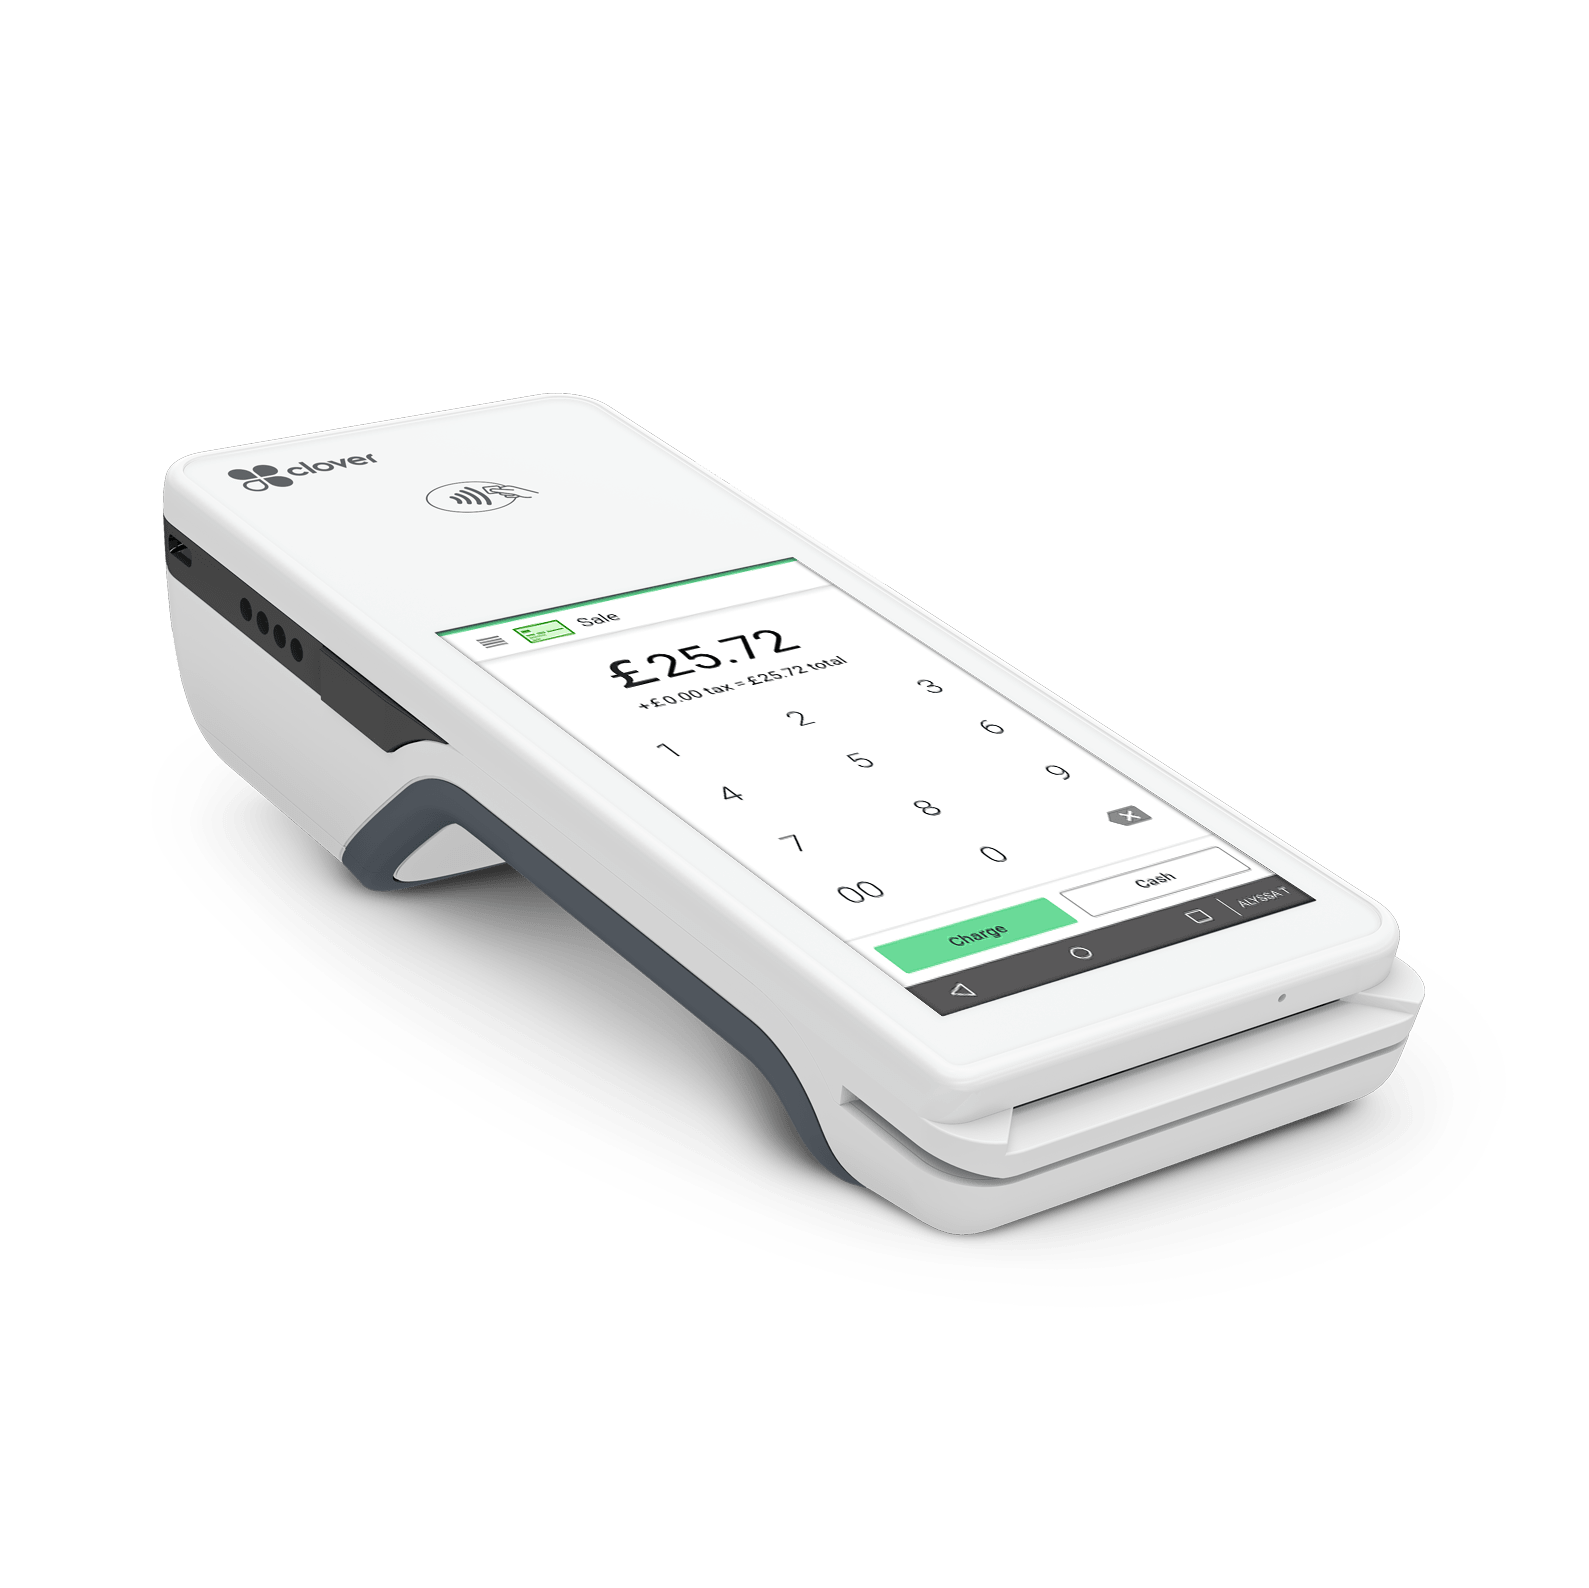 Clover Flex mobile payment machine